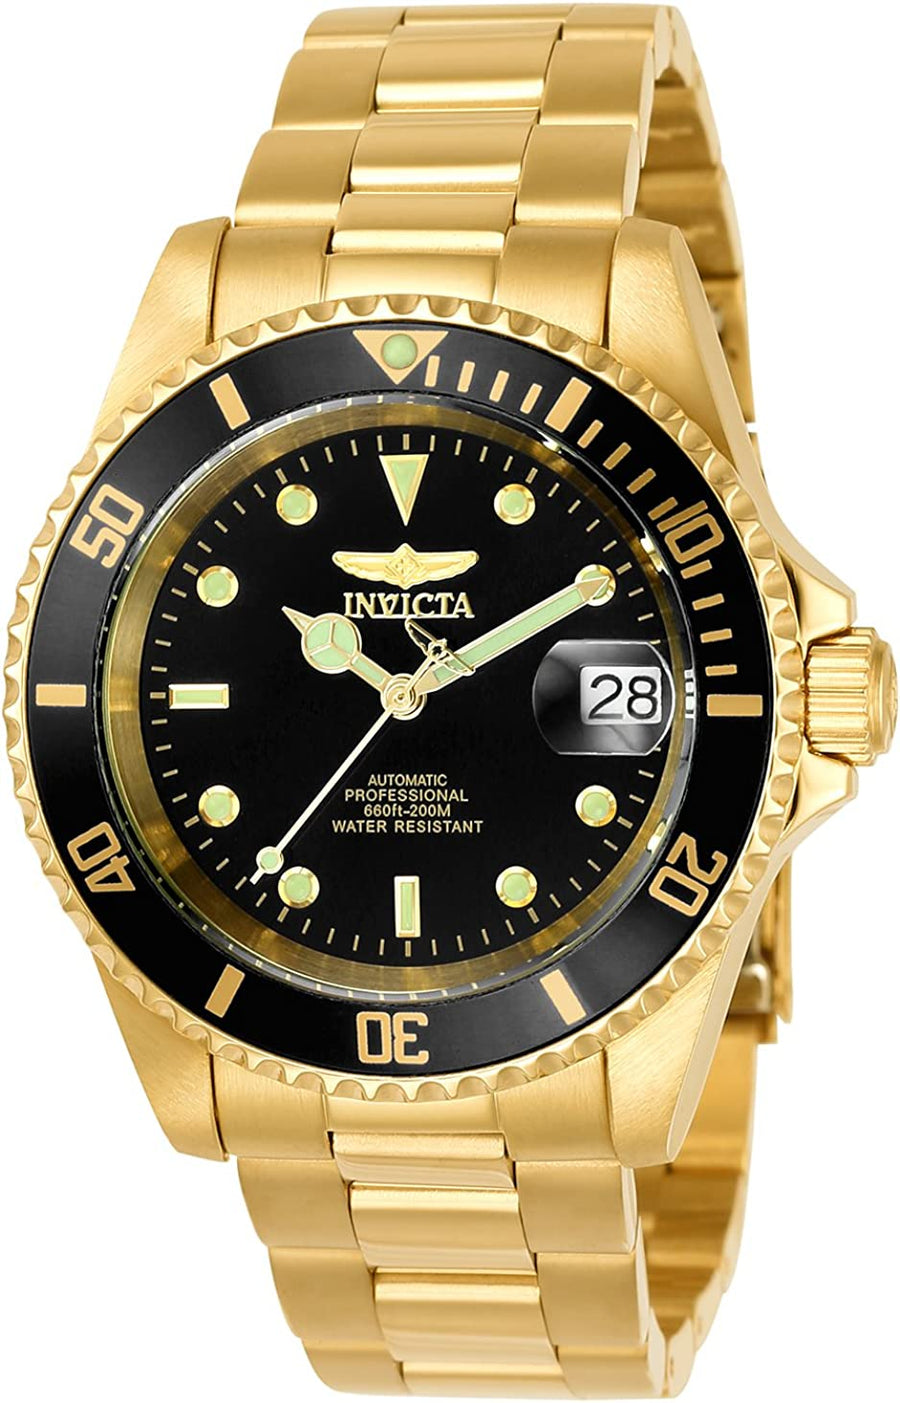 Invicta Men's 8929OB Pro Diver Analog Display Japanese Automatic Gold/Black Watch - 3alababak